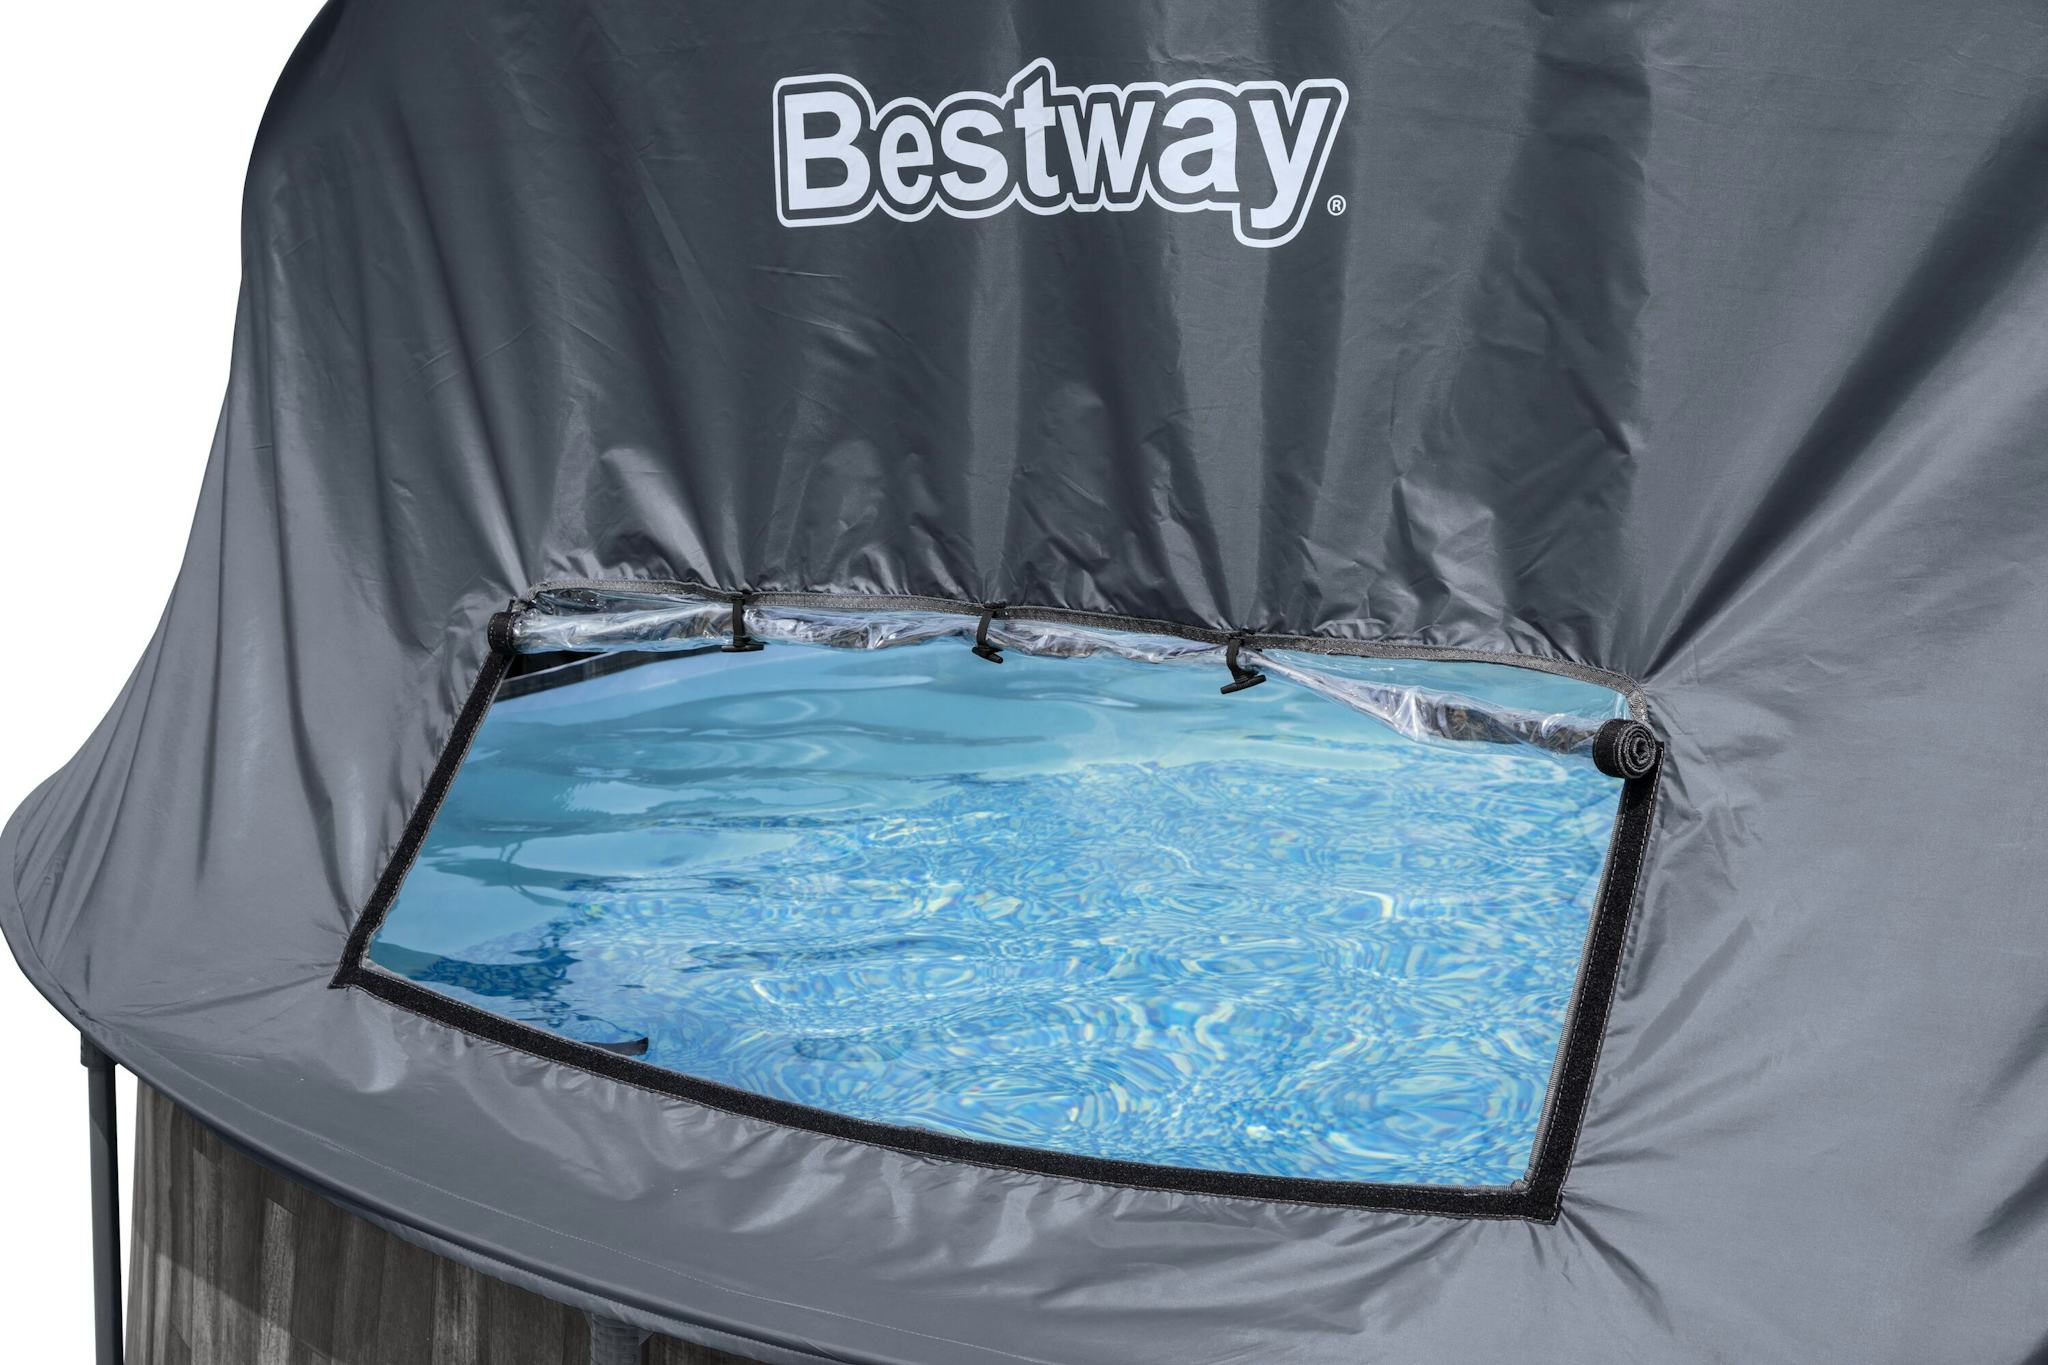 Piscine fuori terra Set piscina fuori terra rotonda Steel Pro MAX da 366x122 cm con tenda parasole Bestway 5